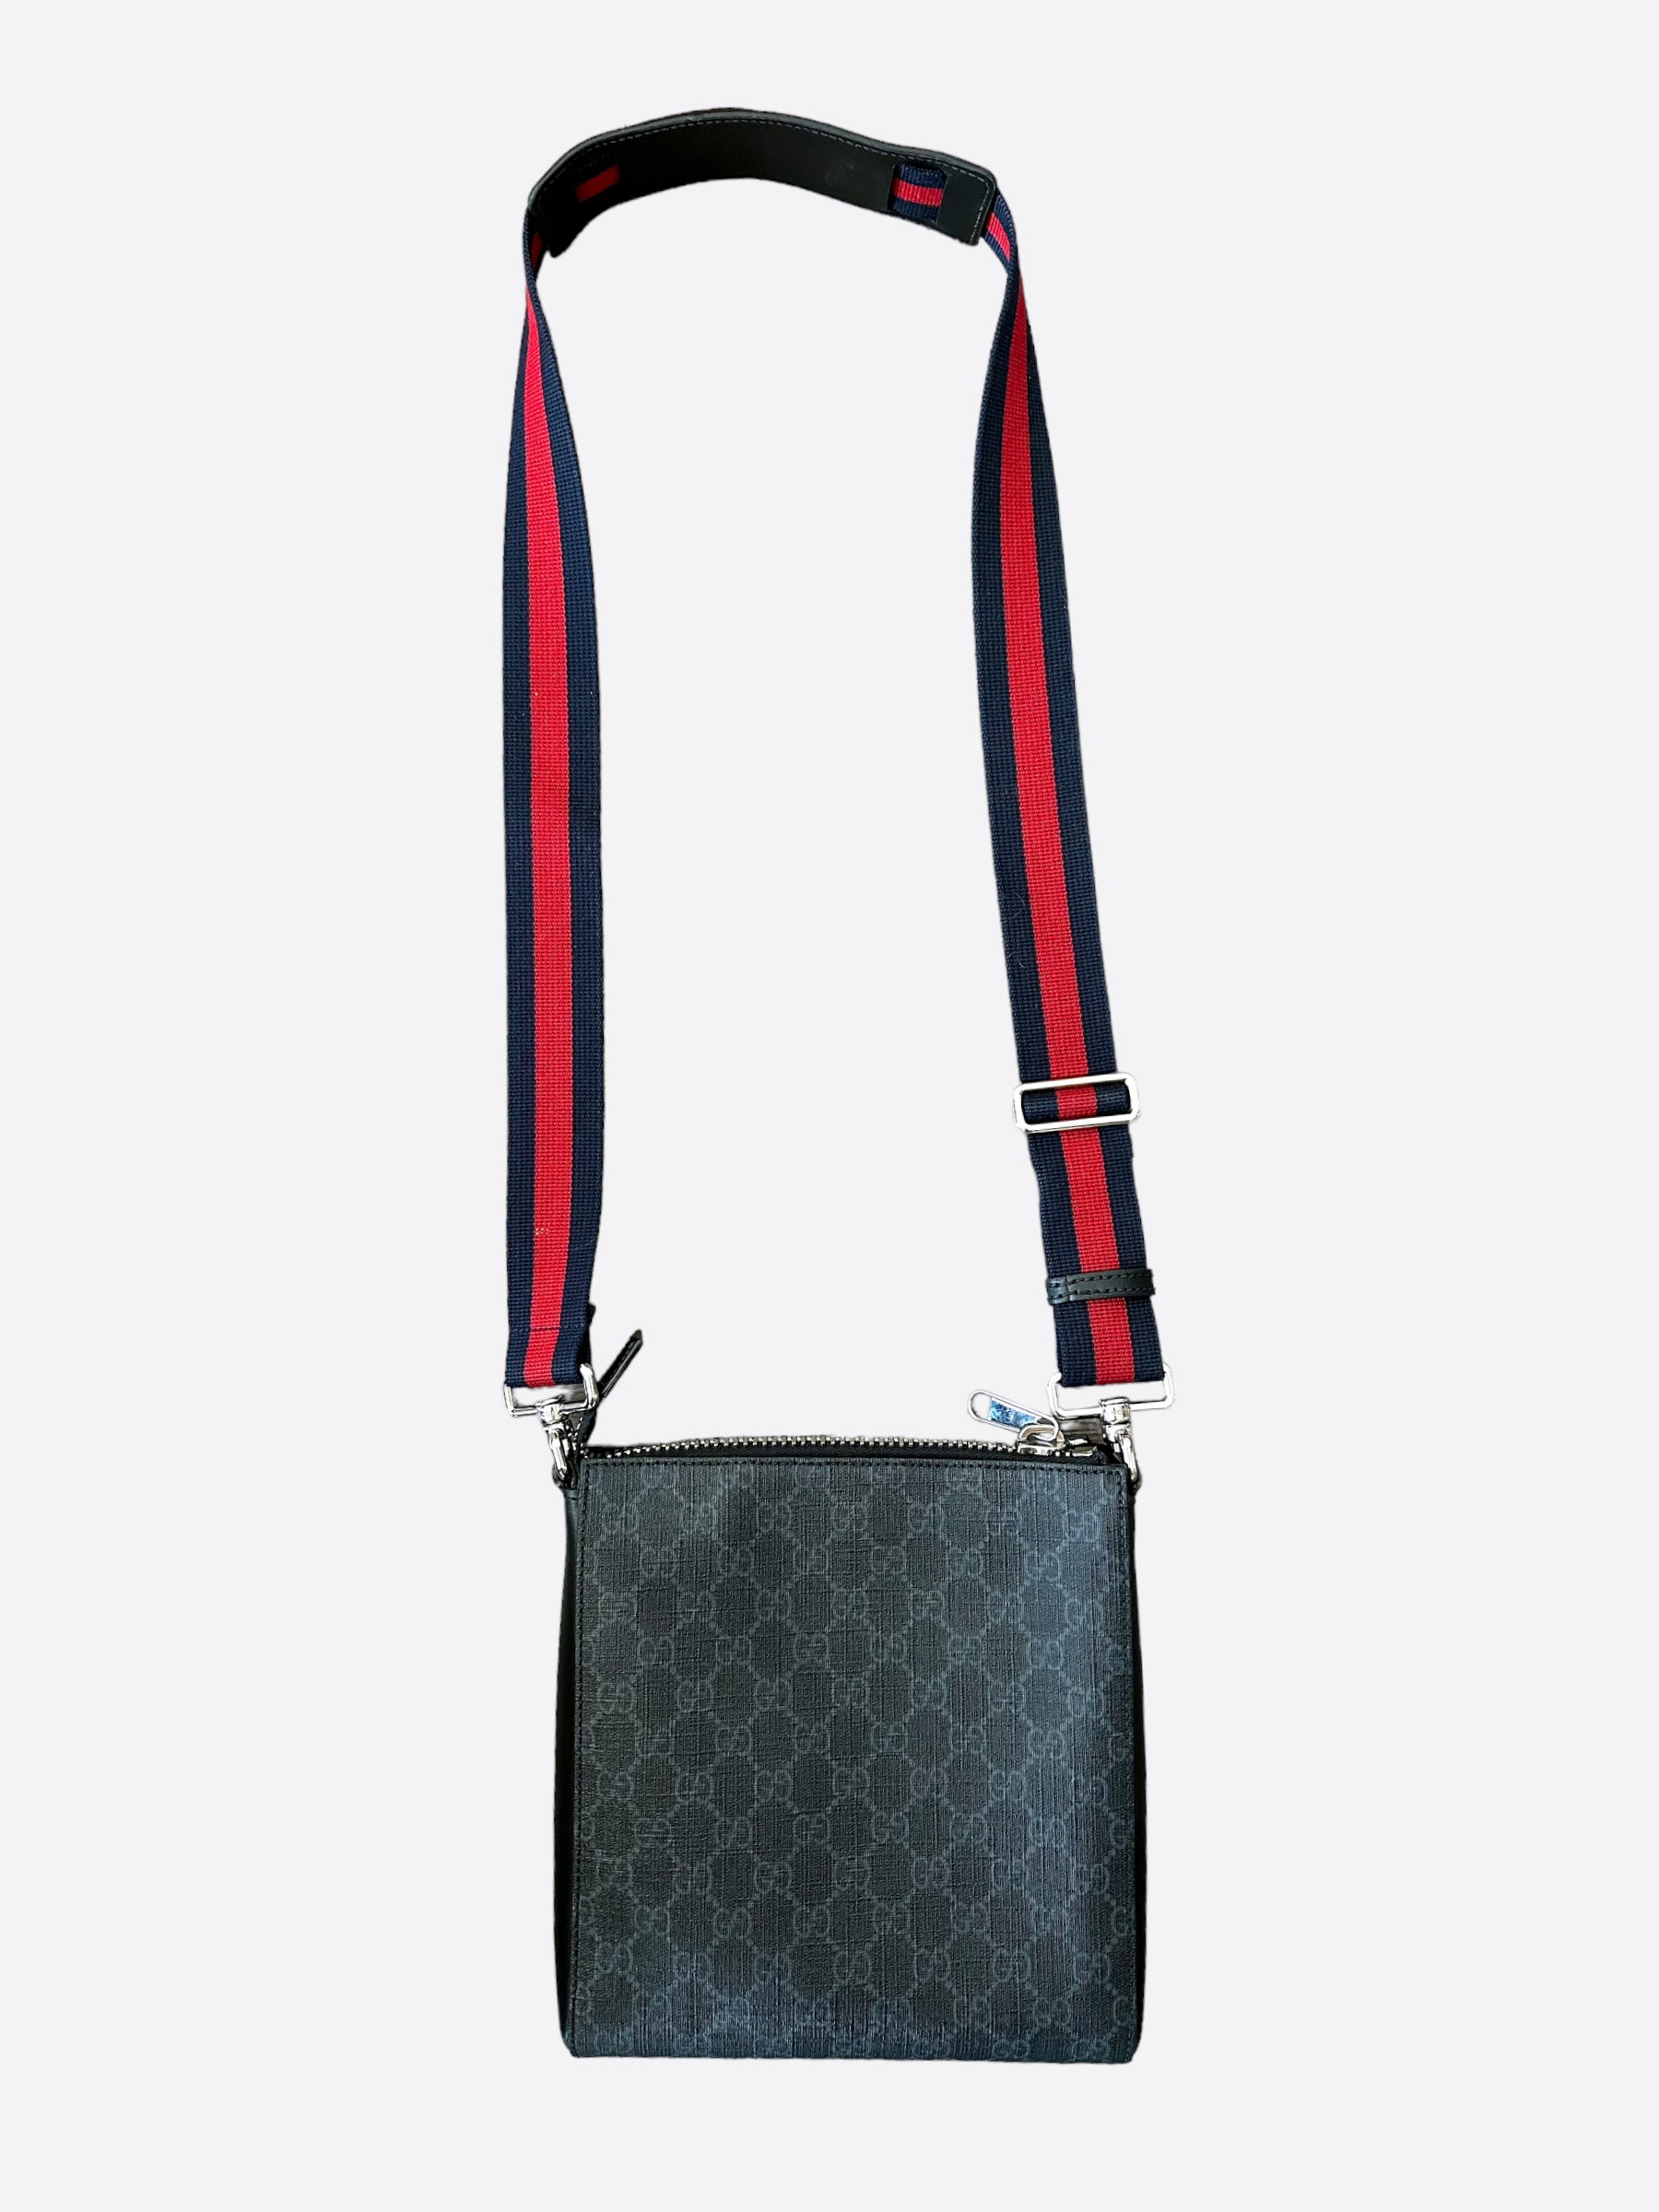 Gucci Gucci GG Monogram Messenger Bag Black